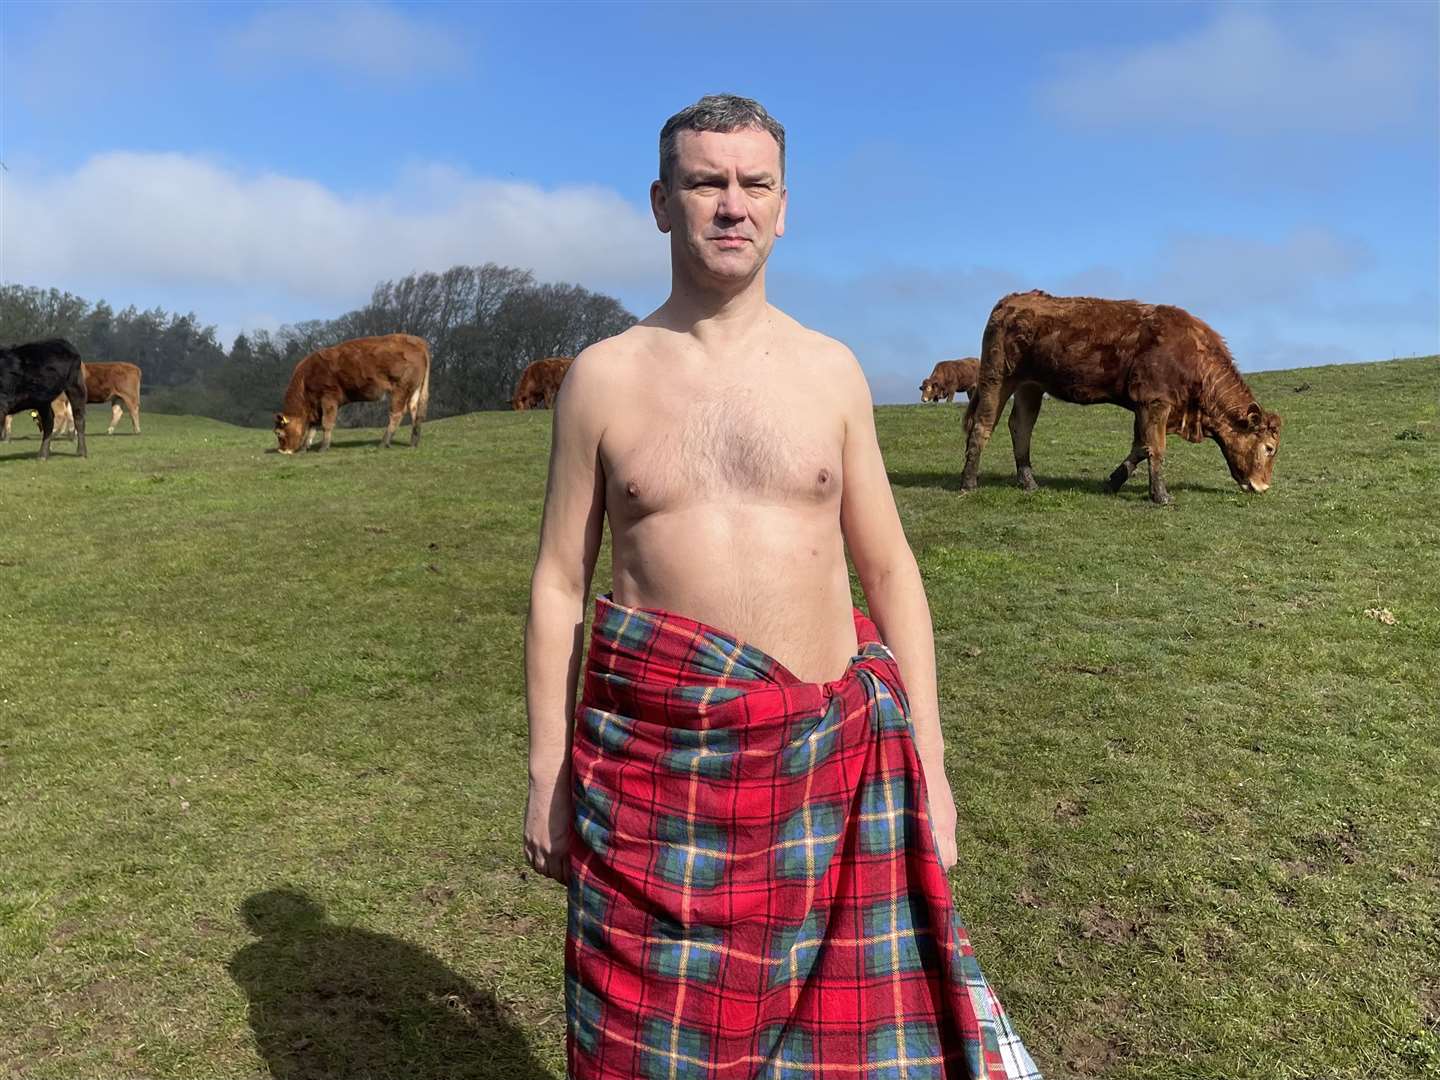 Graham Stewart poses with some cows (Ewan Pringle/PA)